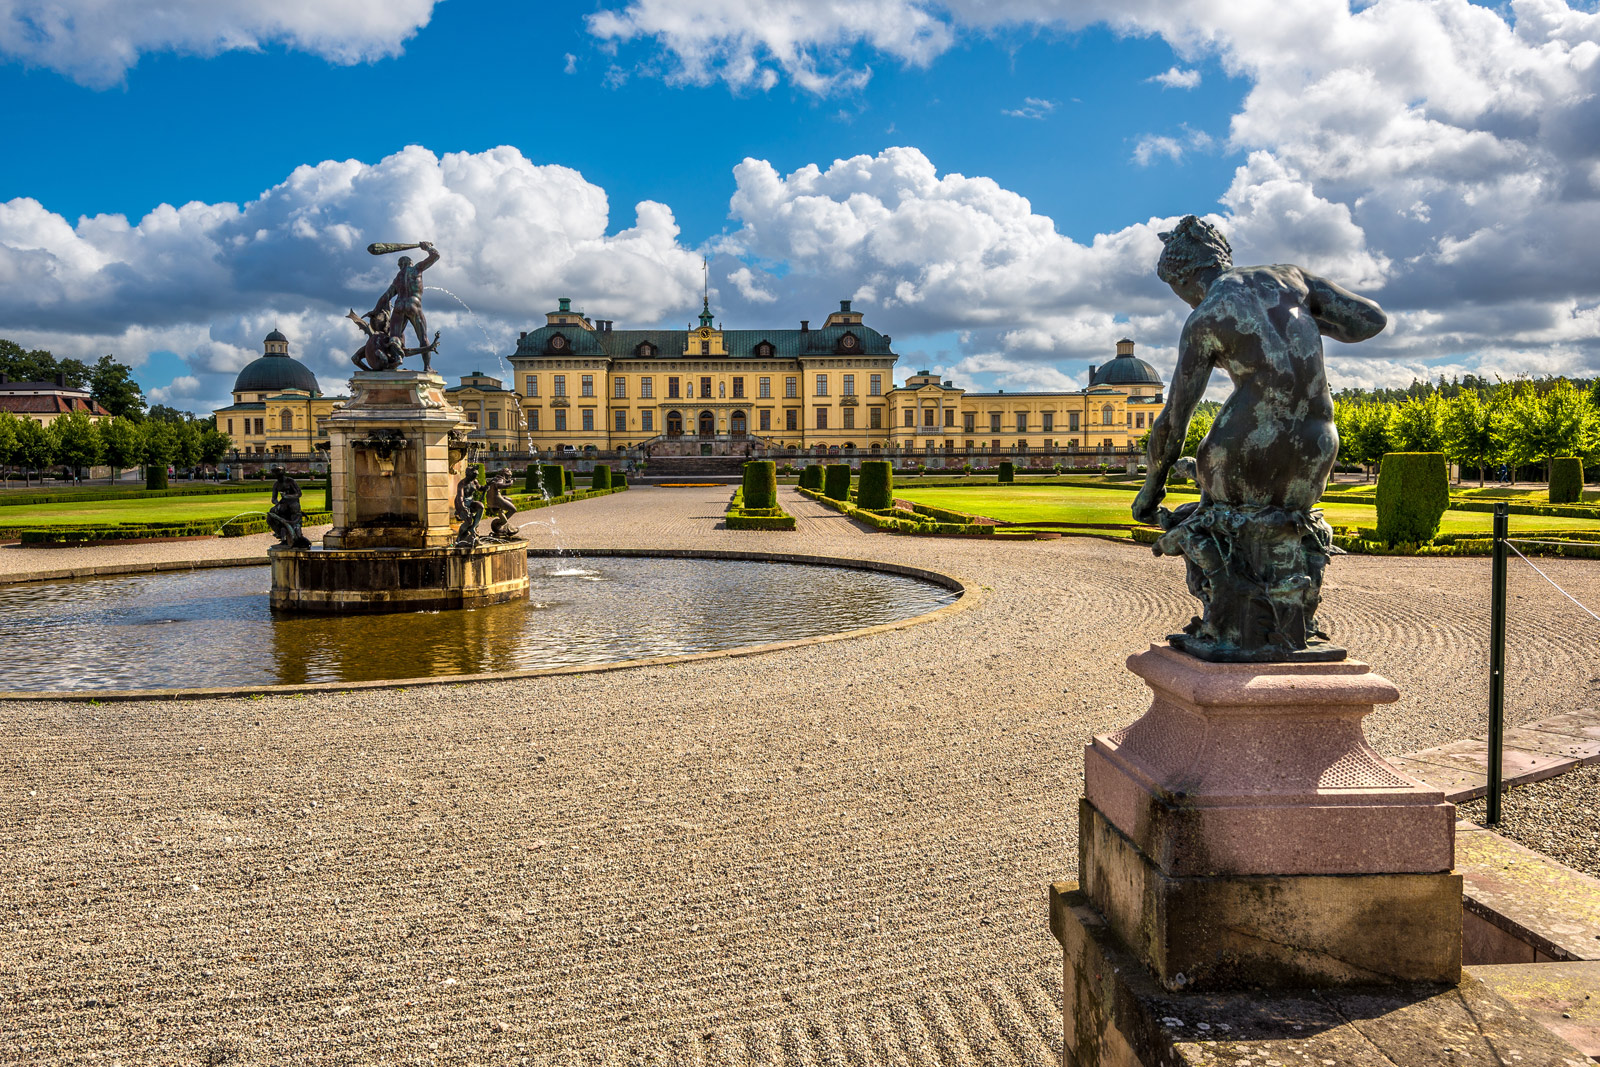 Visit Drottningholm Palace